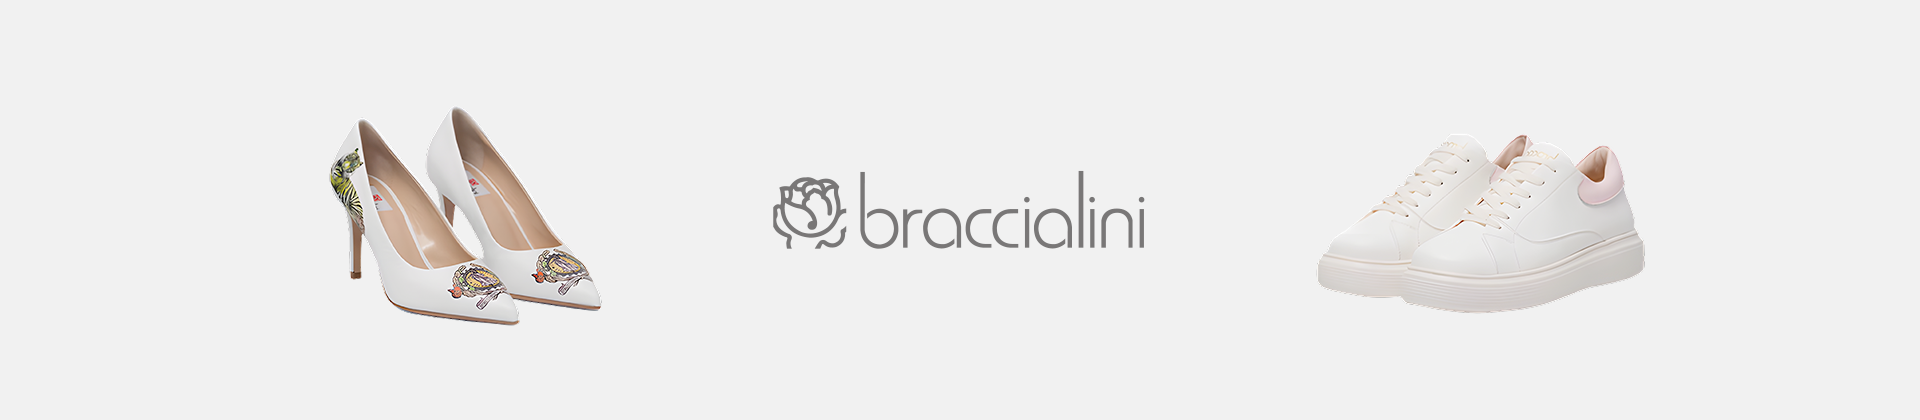 Braccialini: Shoes and Fashion Accessories